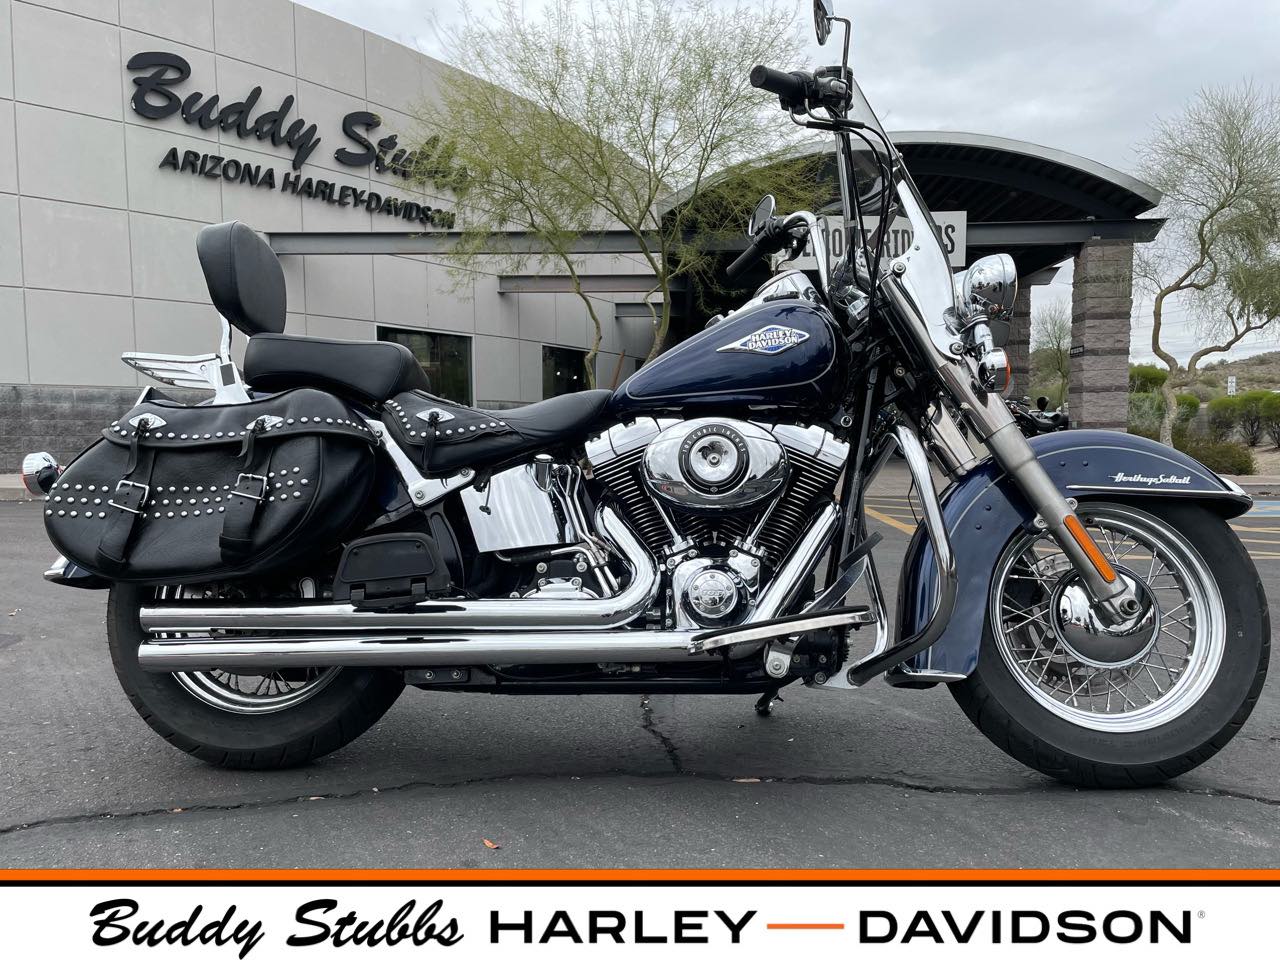 2013 Harley-Davidson Softail Heritage Softail Classic at Buddy Stubbs Arizona Harley-Davidson